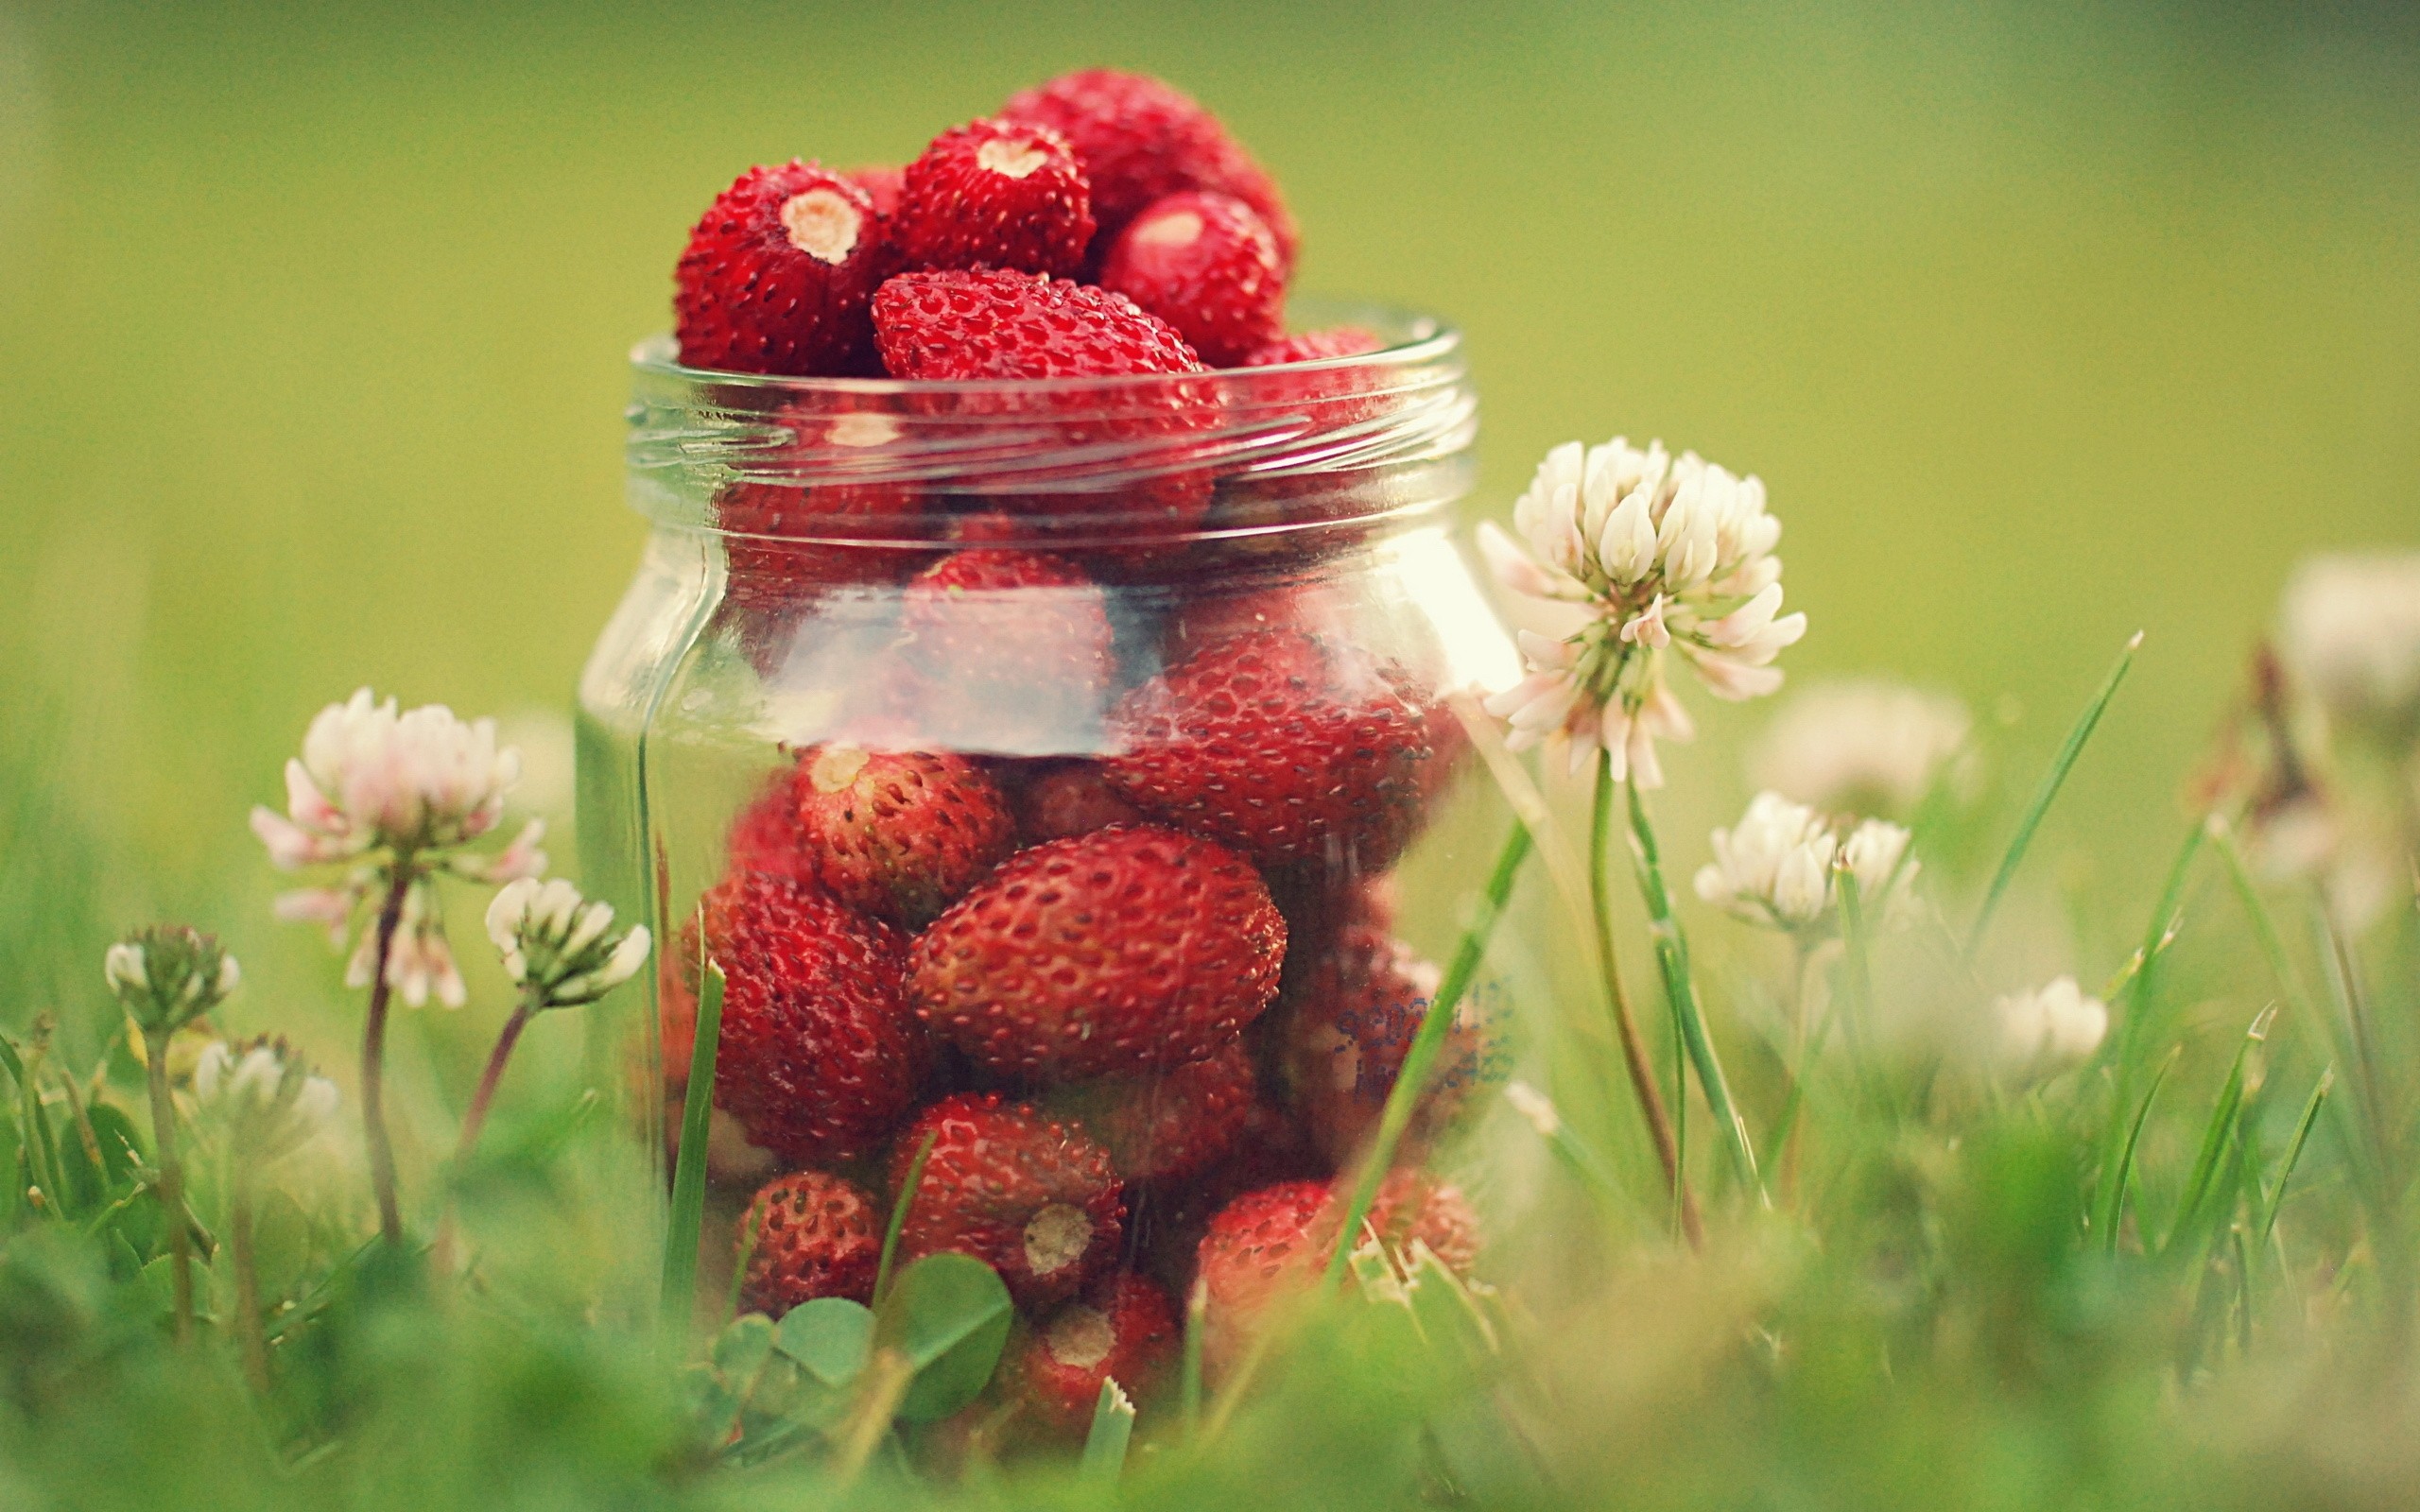 General 2560x1600 macro grass strawberries food fruit berries green background plants